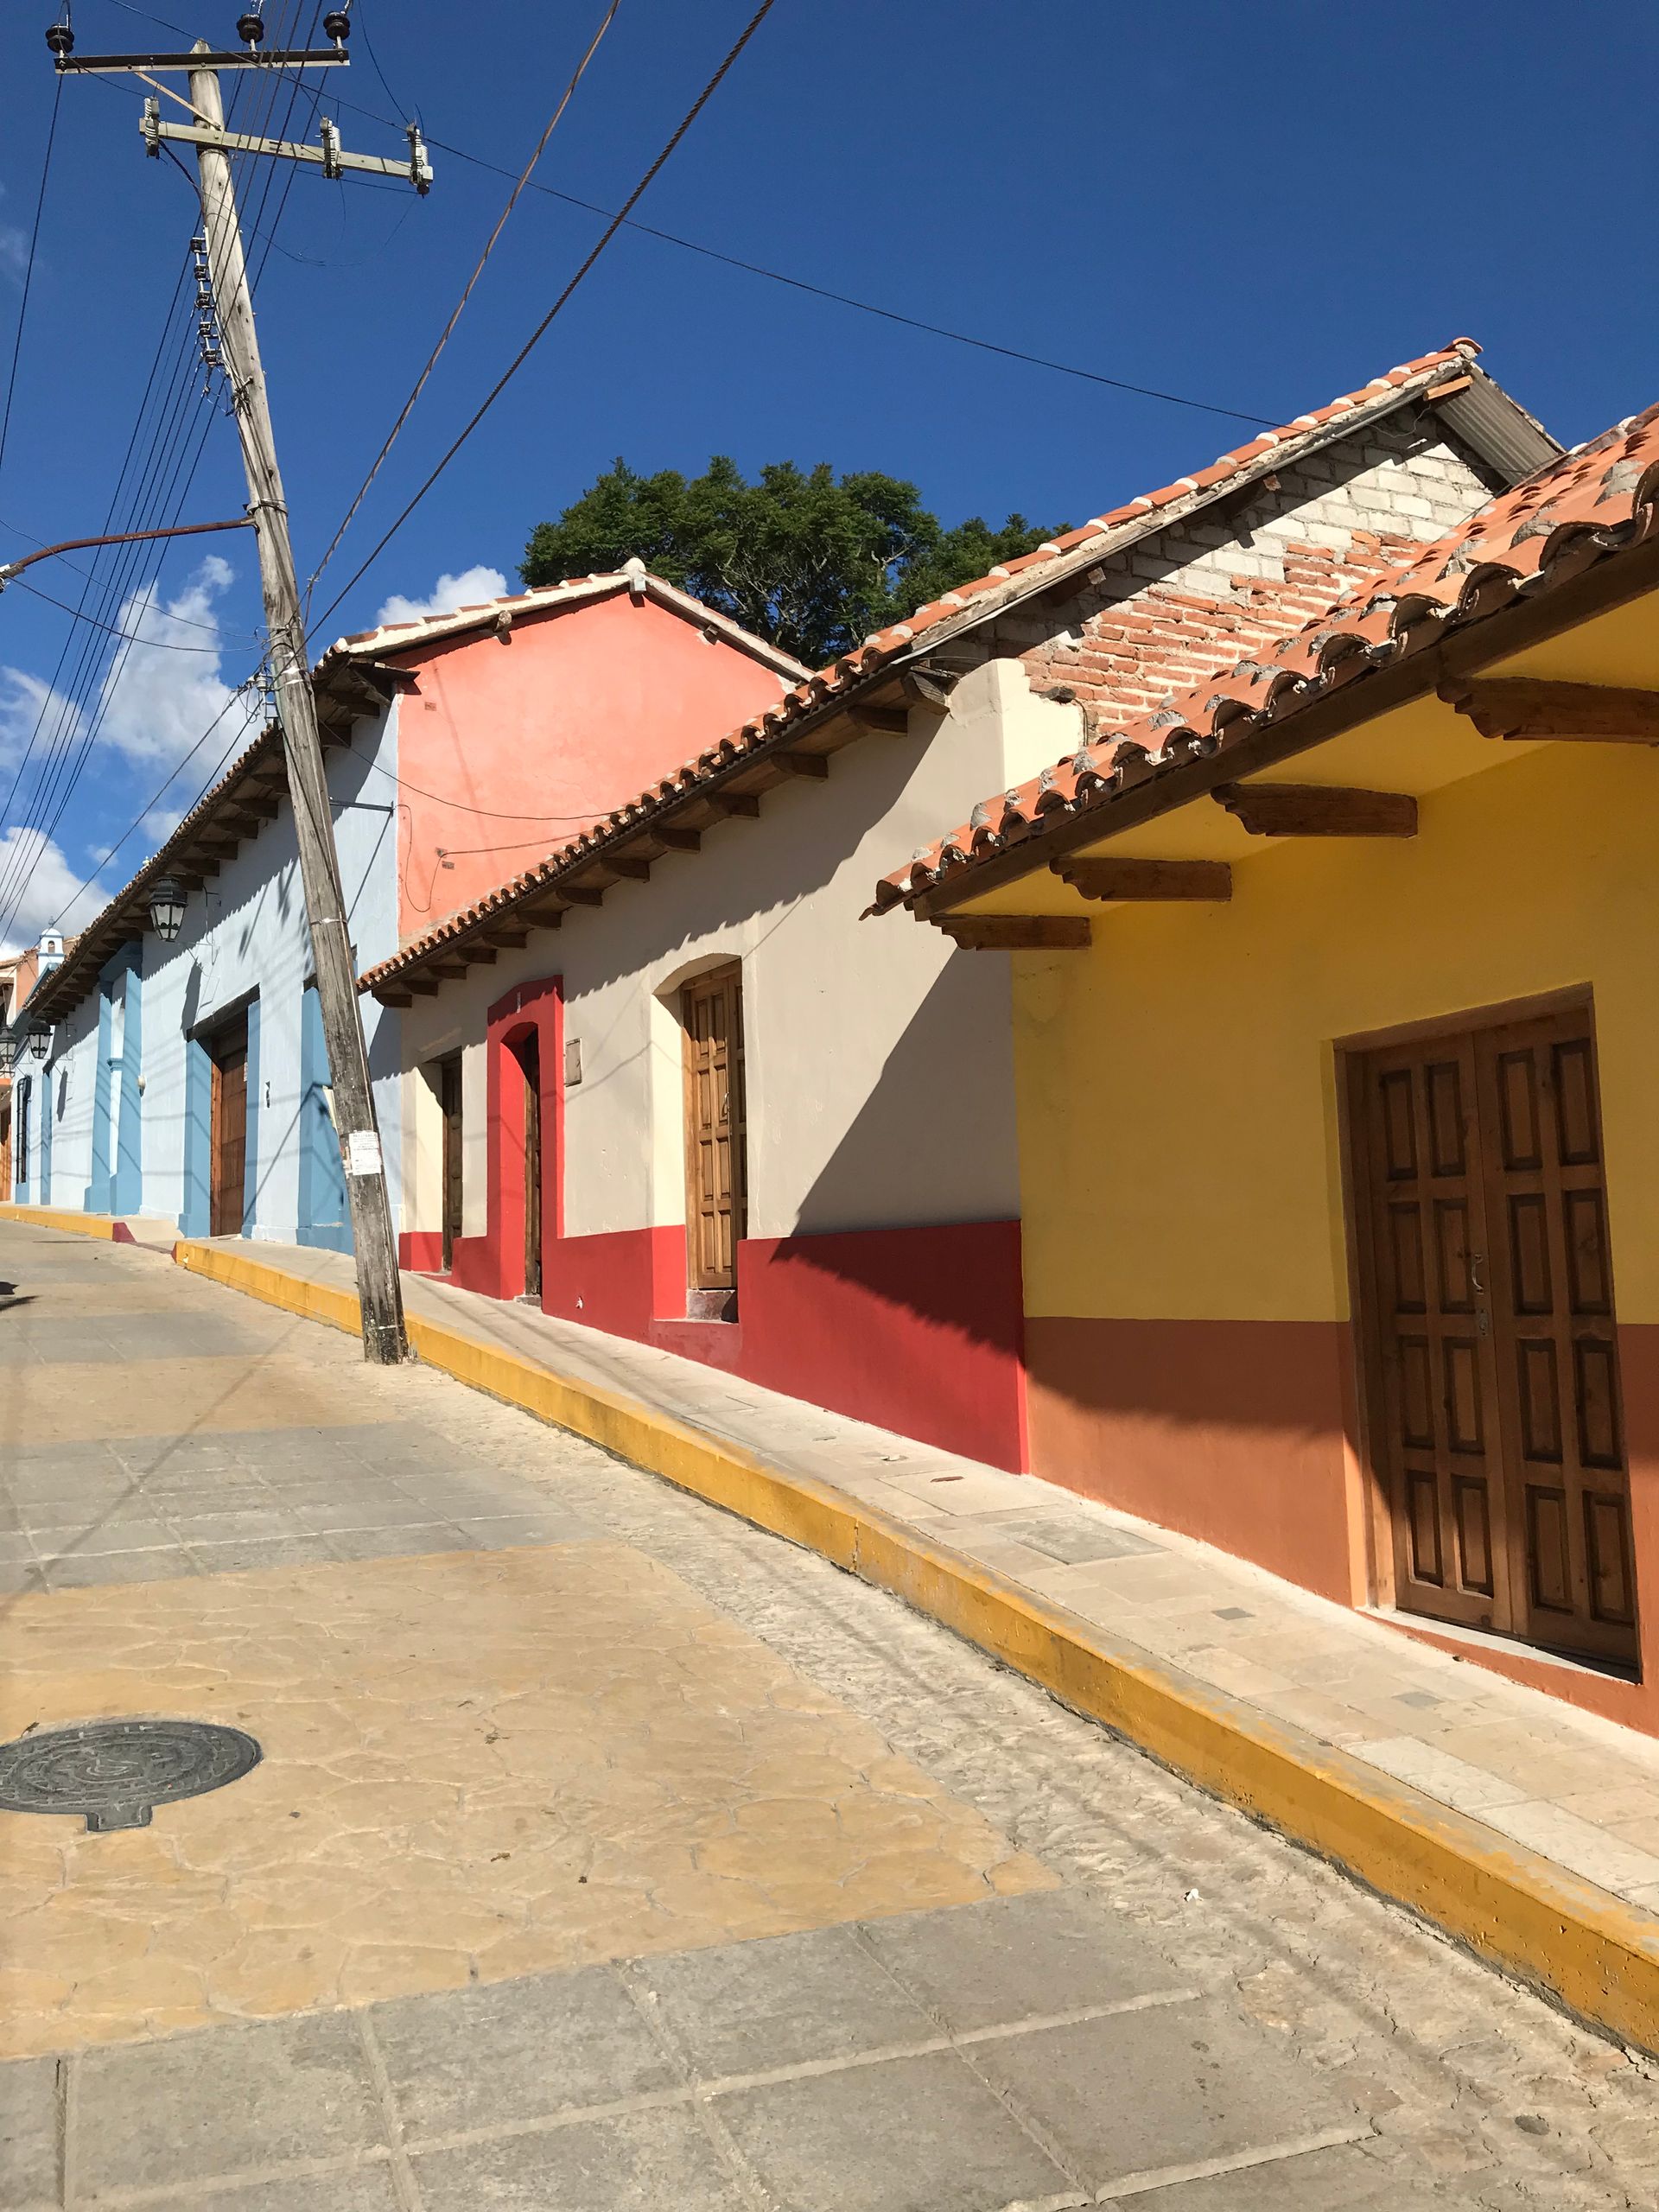 Streets in San Cristóbal